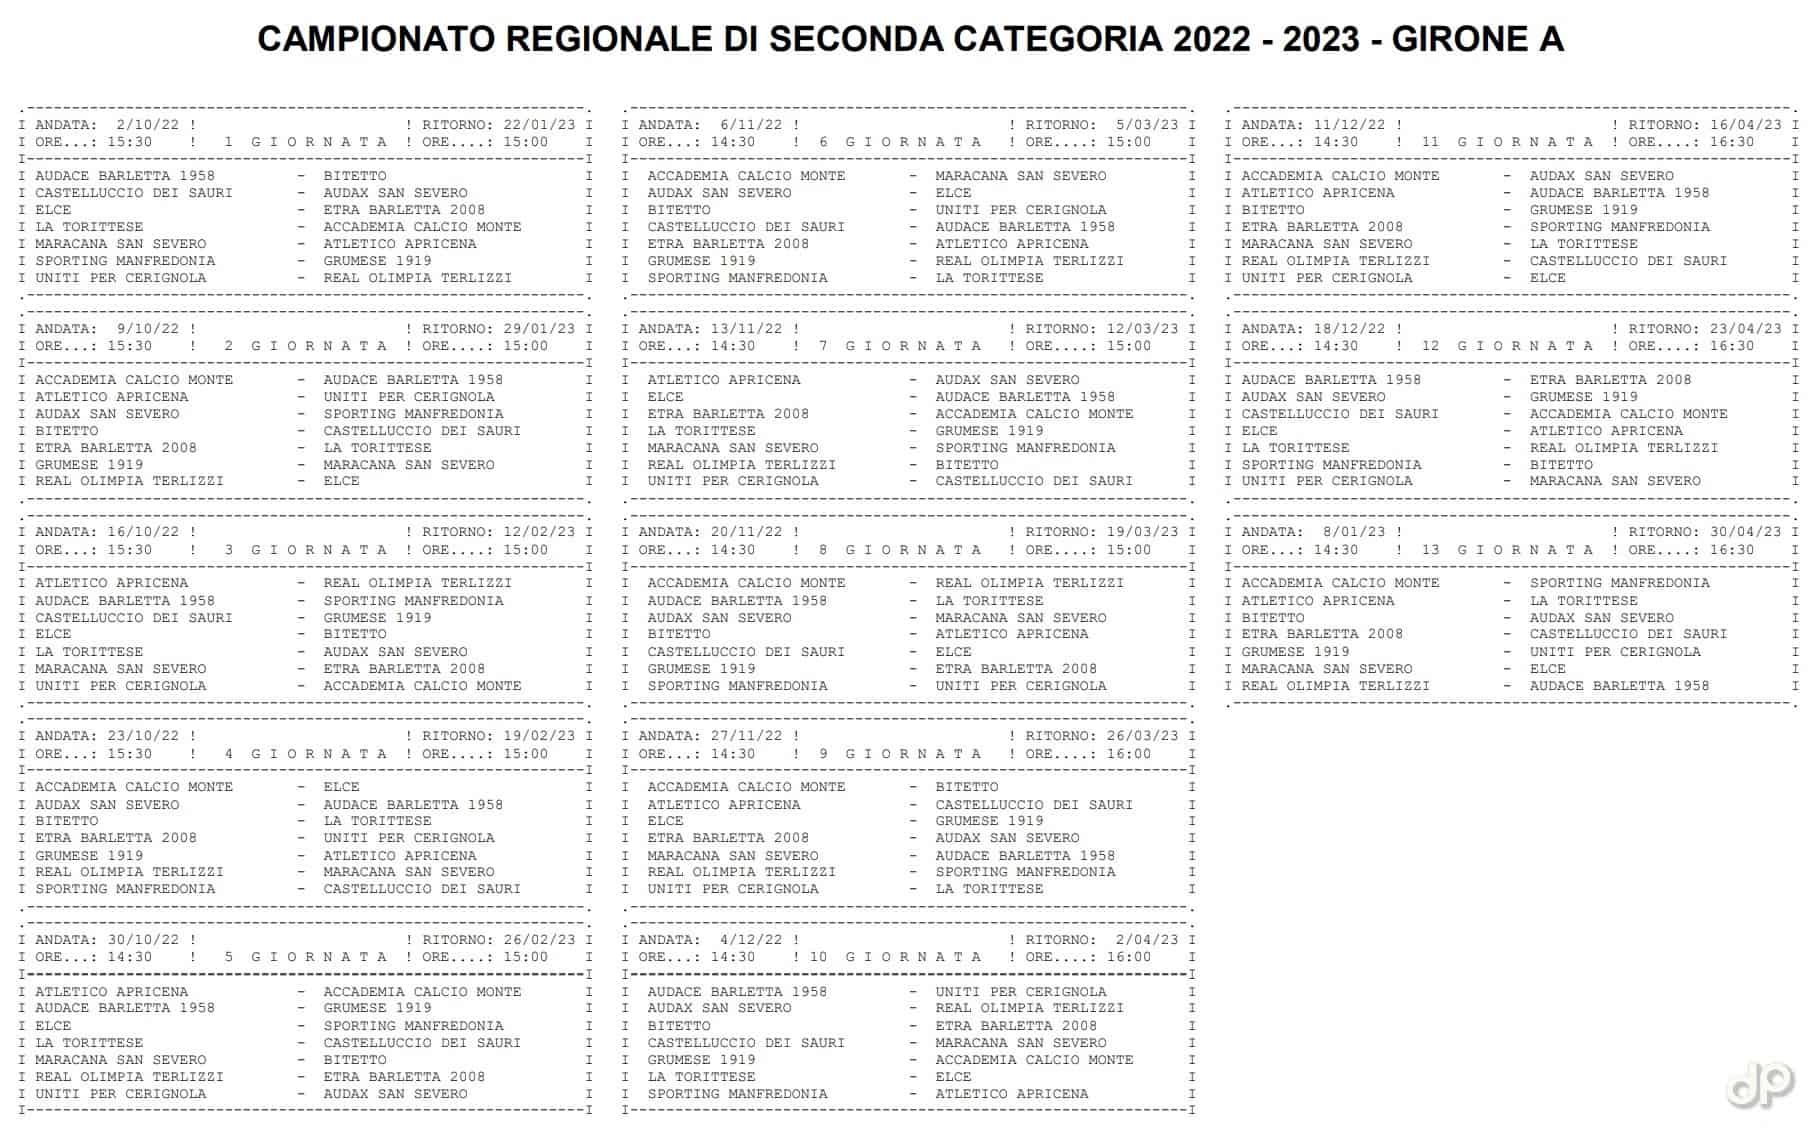 Calendario Seconda Categoria pugliese girone A 2022-23